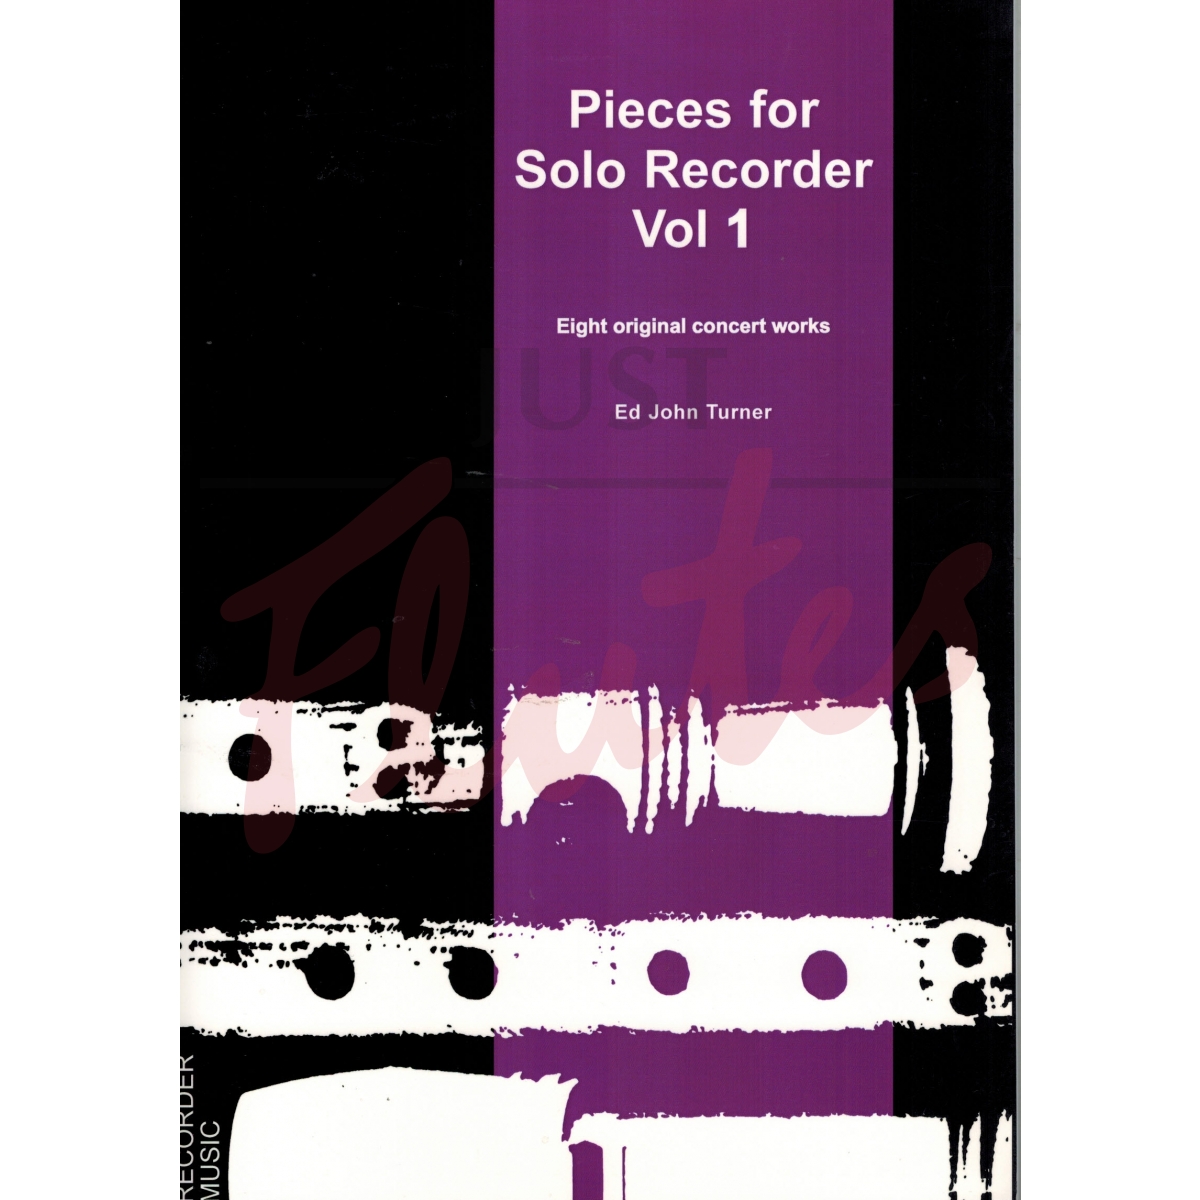 Pieces for Solo Recorder Vol 1